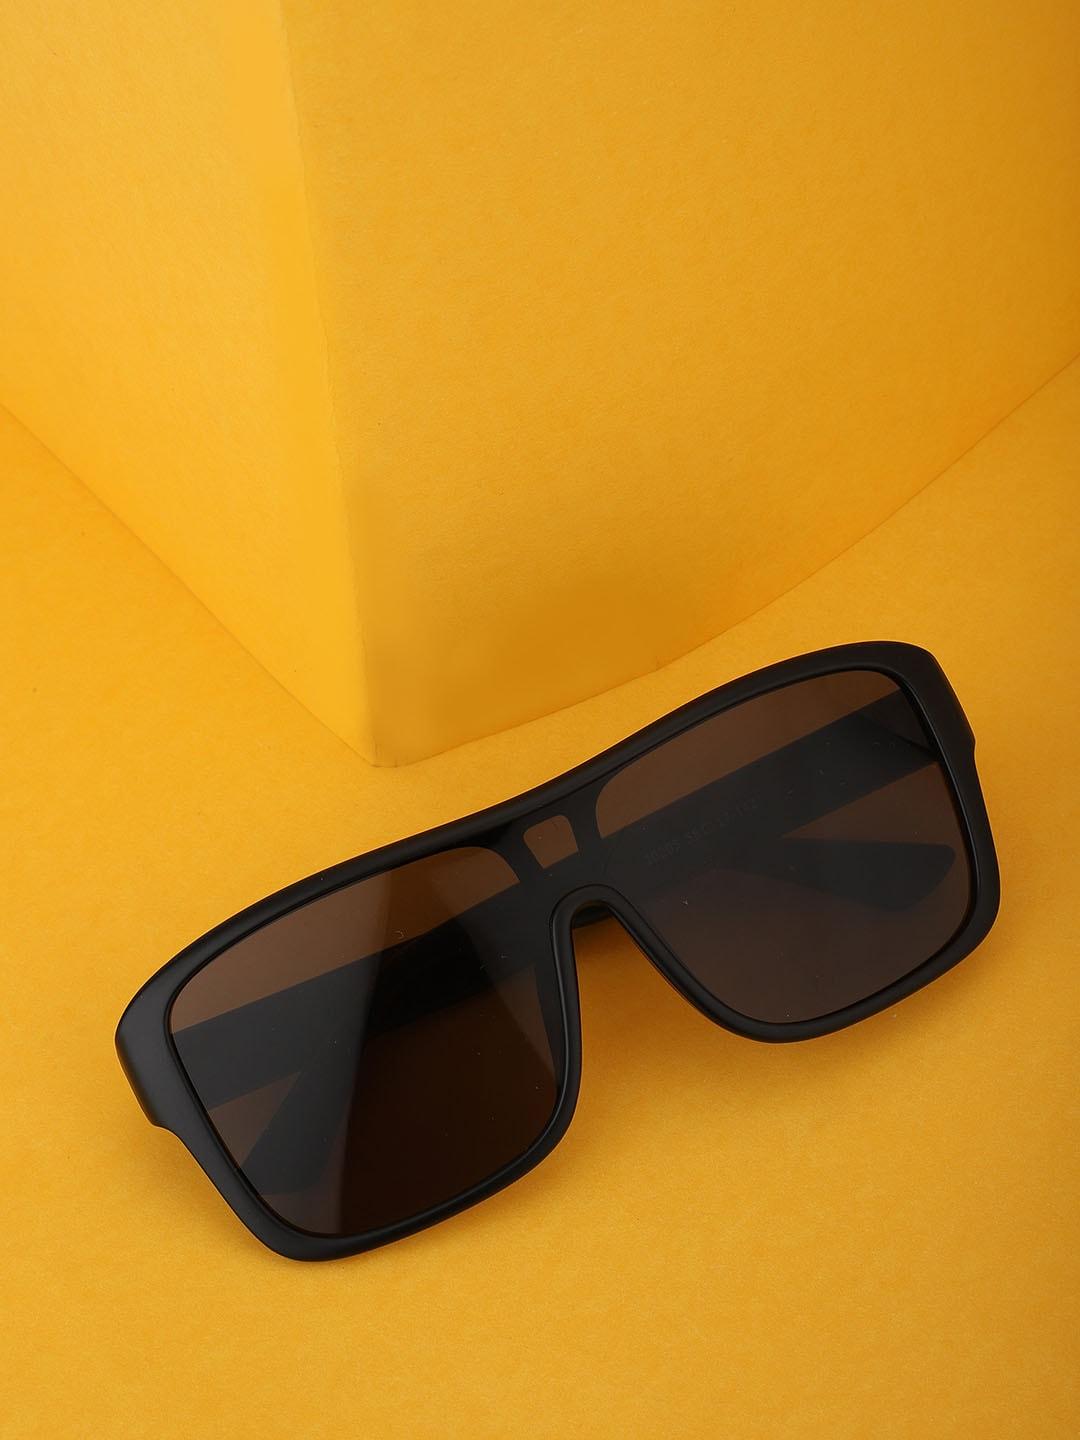 carlton-london-women-grey-lens-&-black-shield-sunglasses